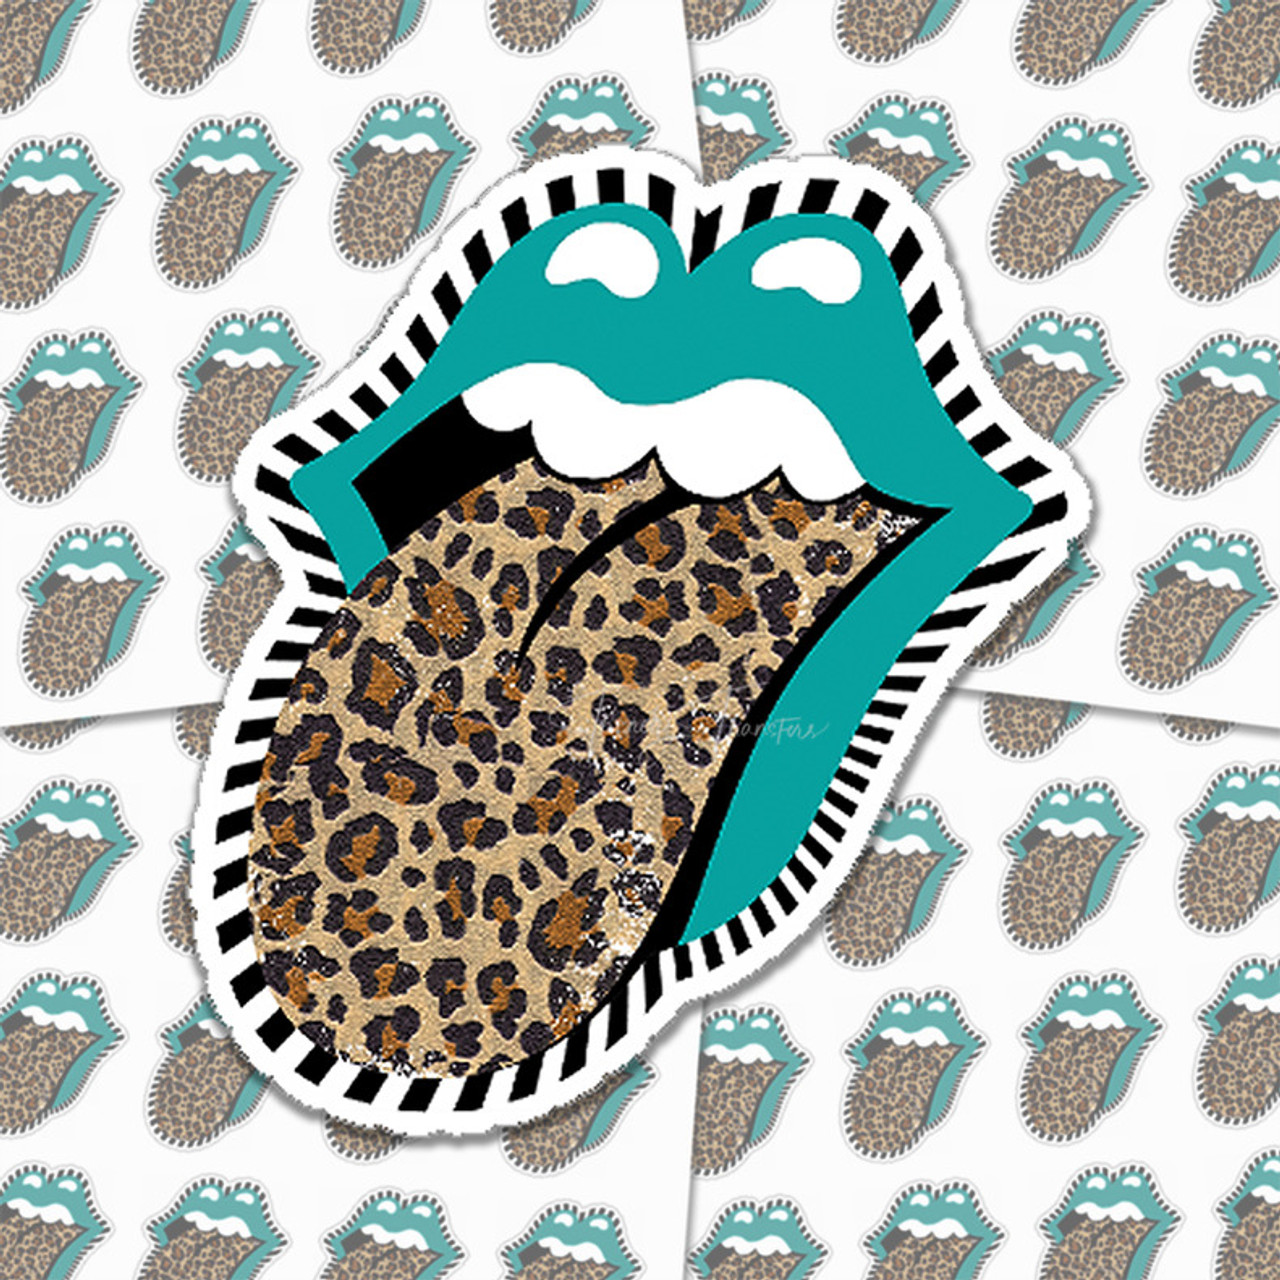 Teal rolling stones leopard tongue sticker sheet